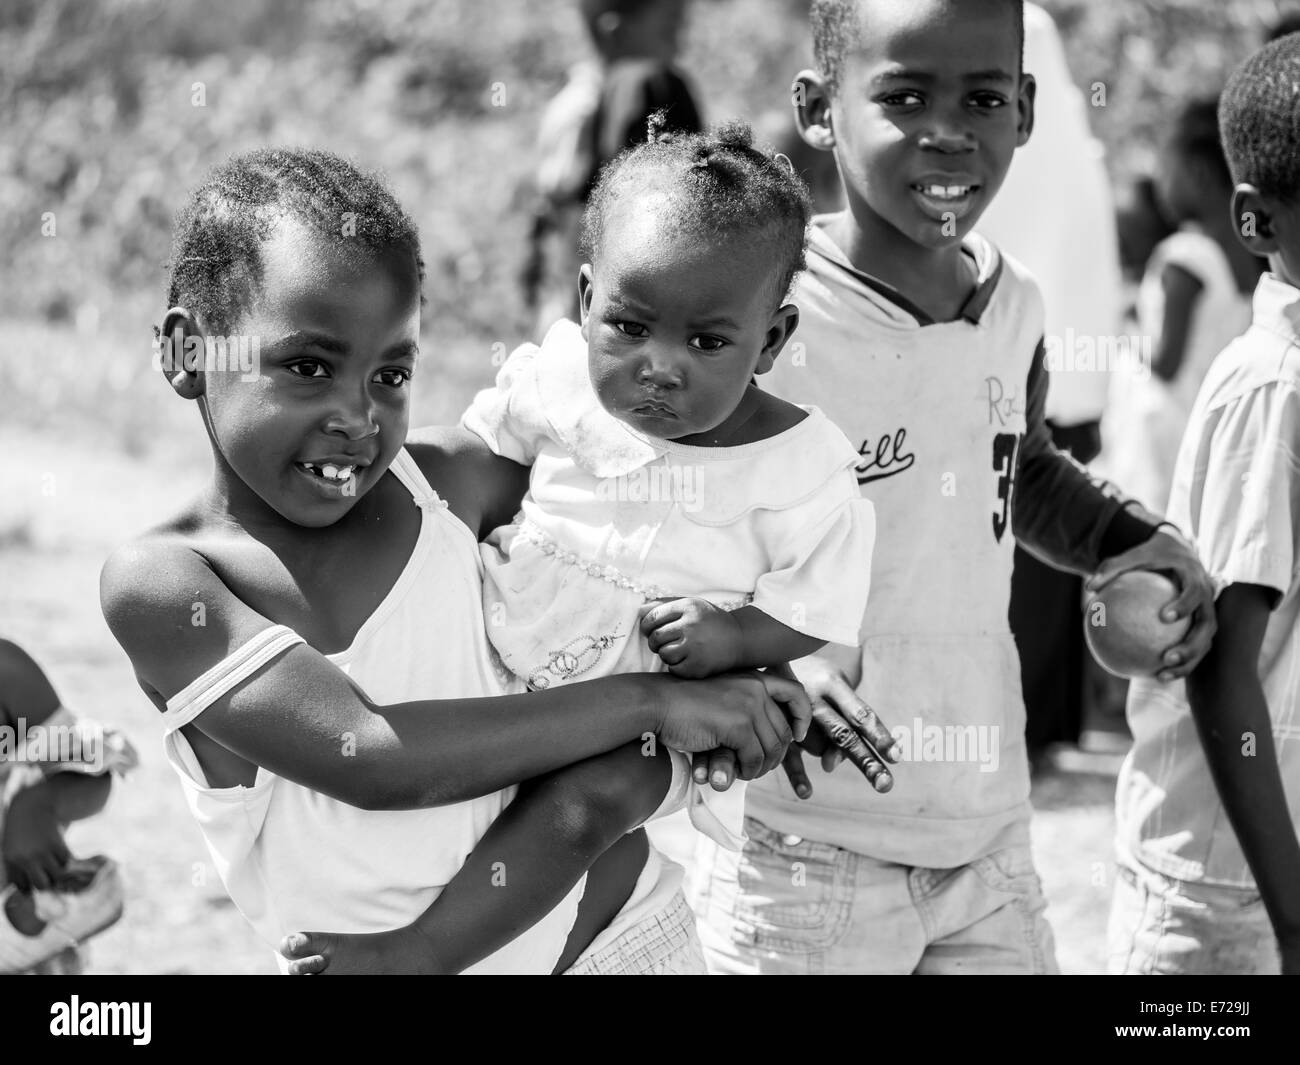 Local children asking people to take photos of them on Zanzibar island. Stock Photo